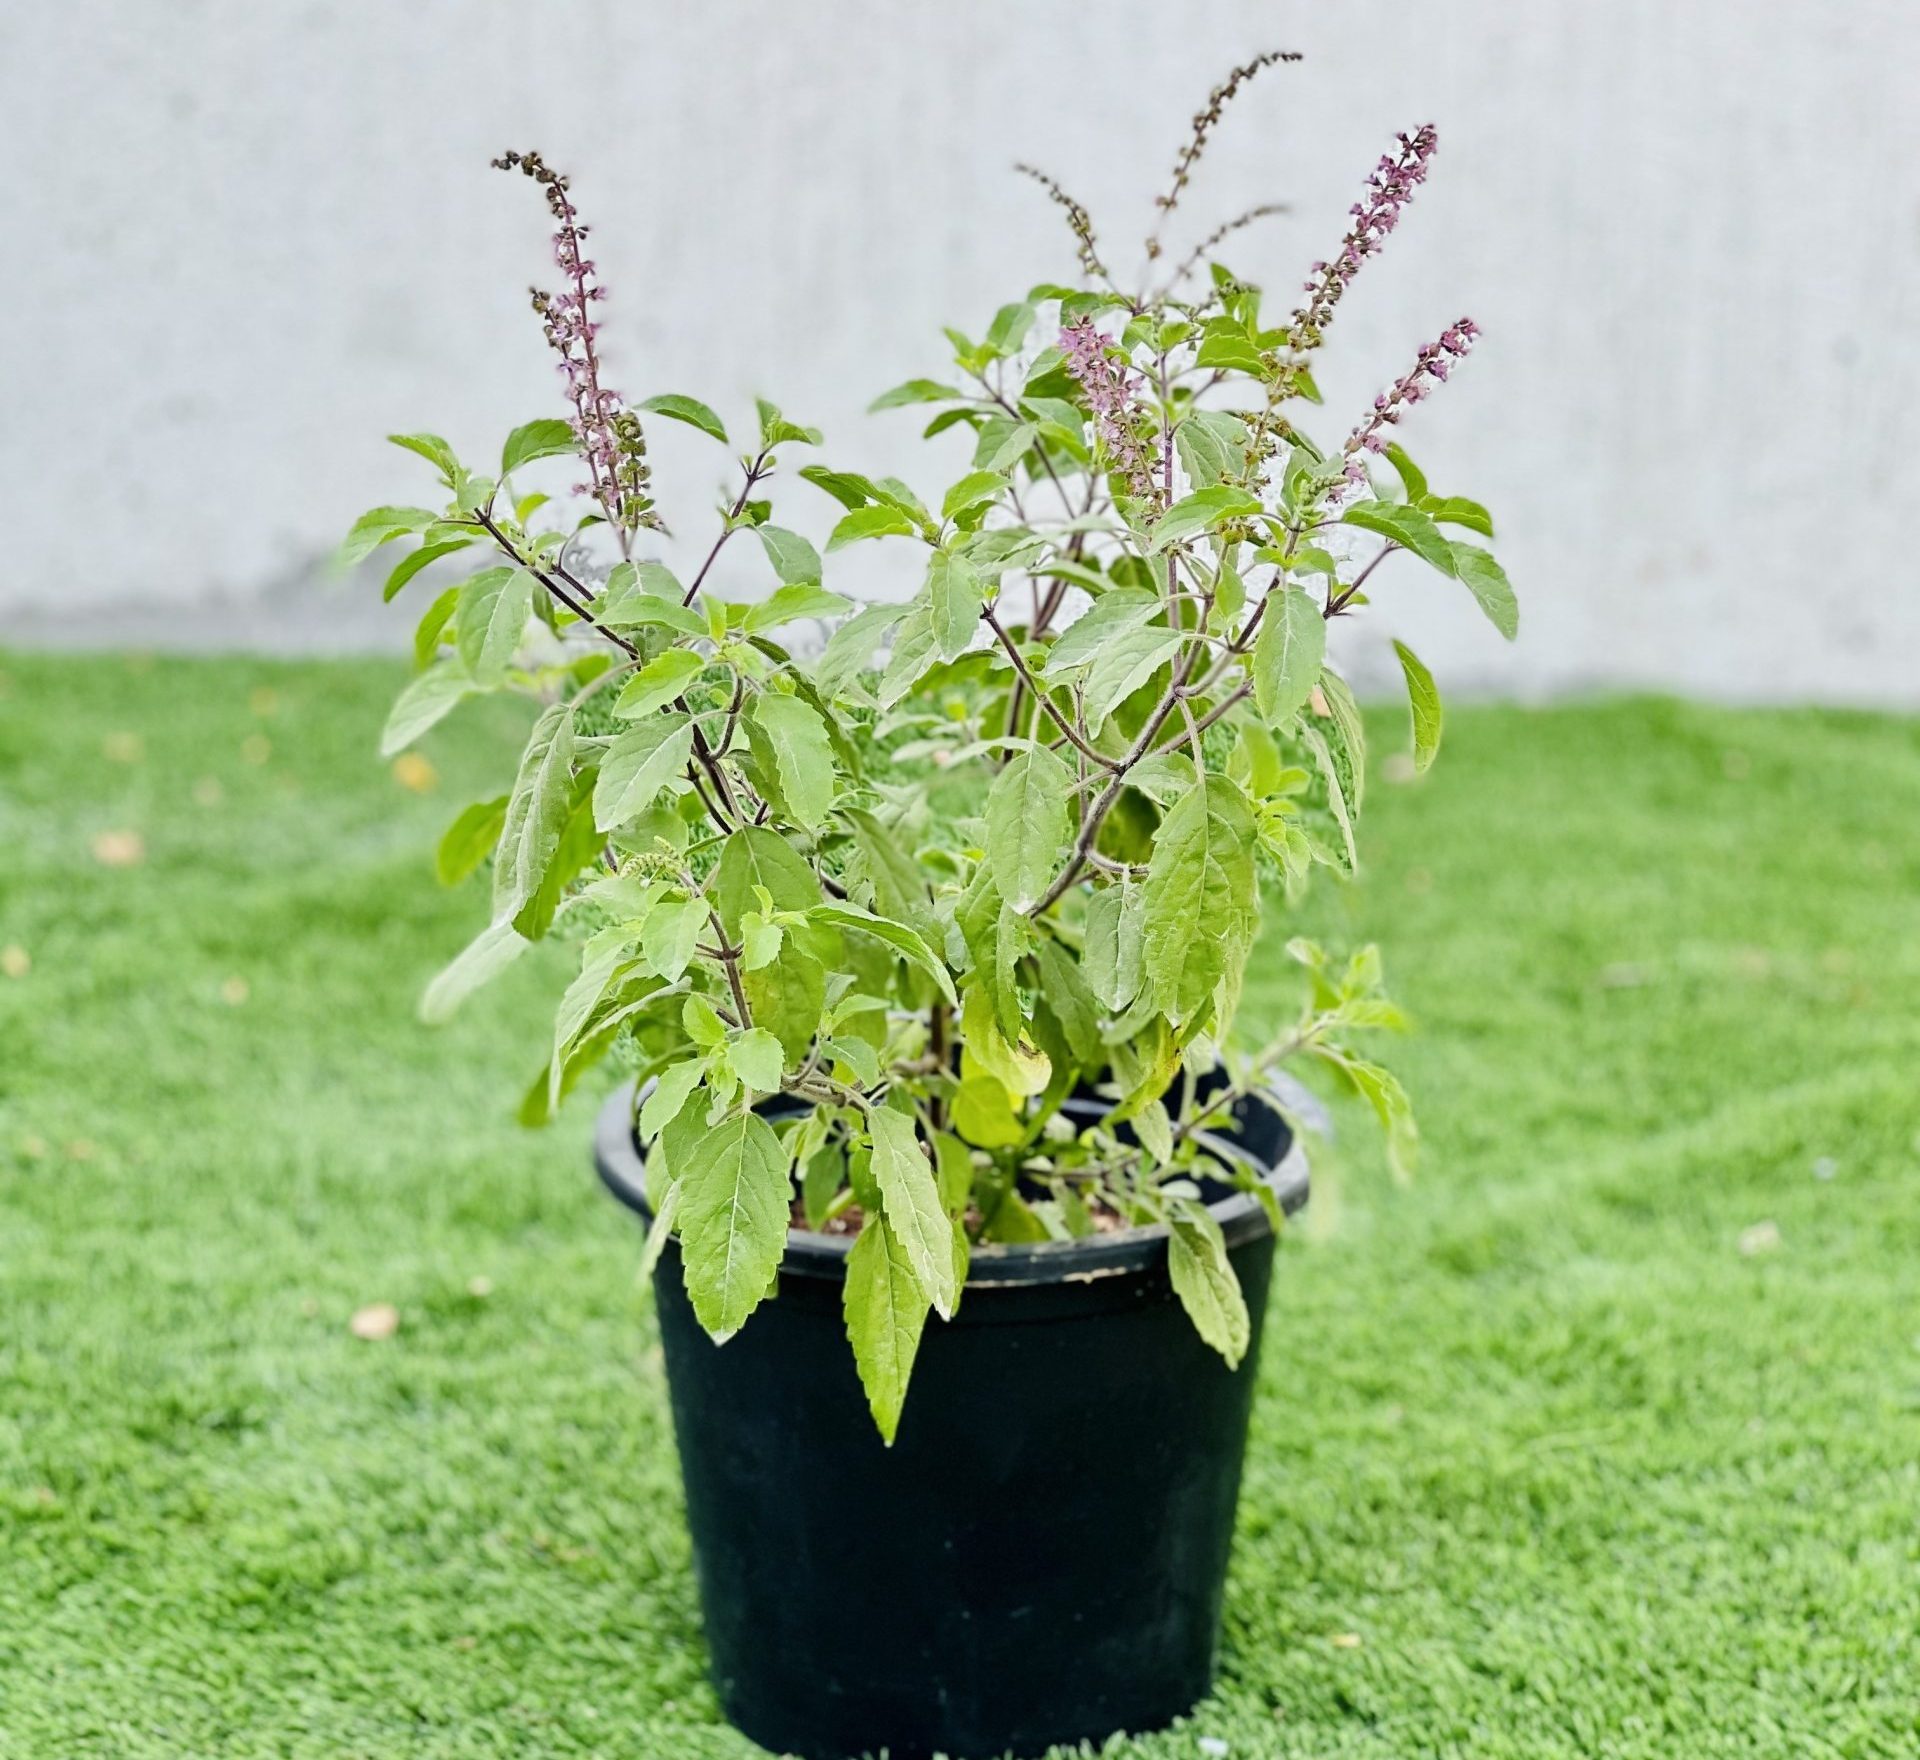 ocimum tenuiflorum/tulsi plant/holy basil (20-30 cm) - green souq uae